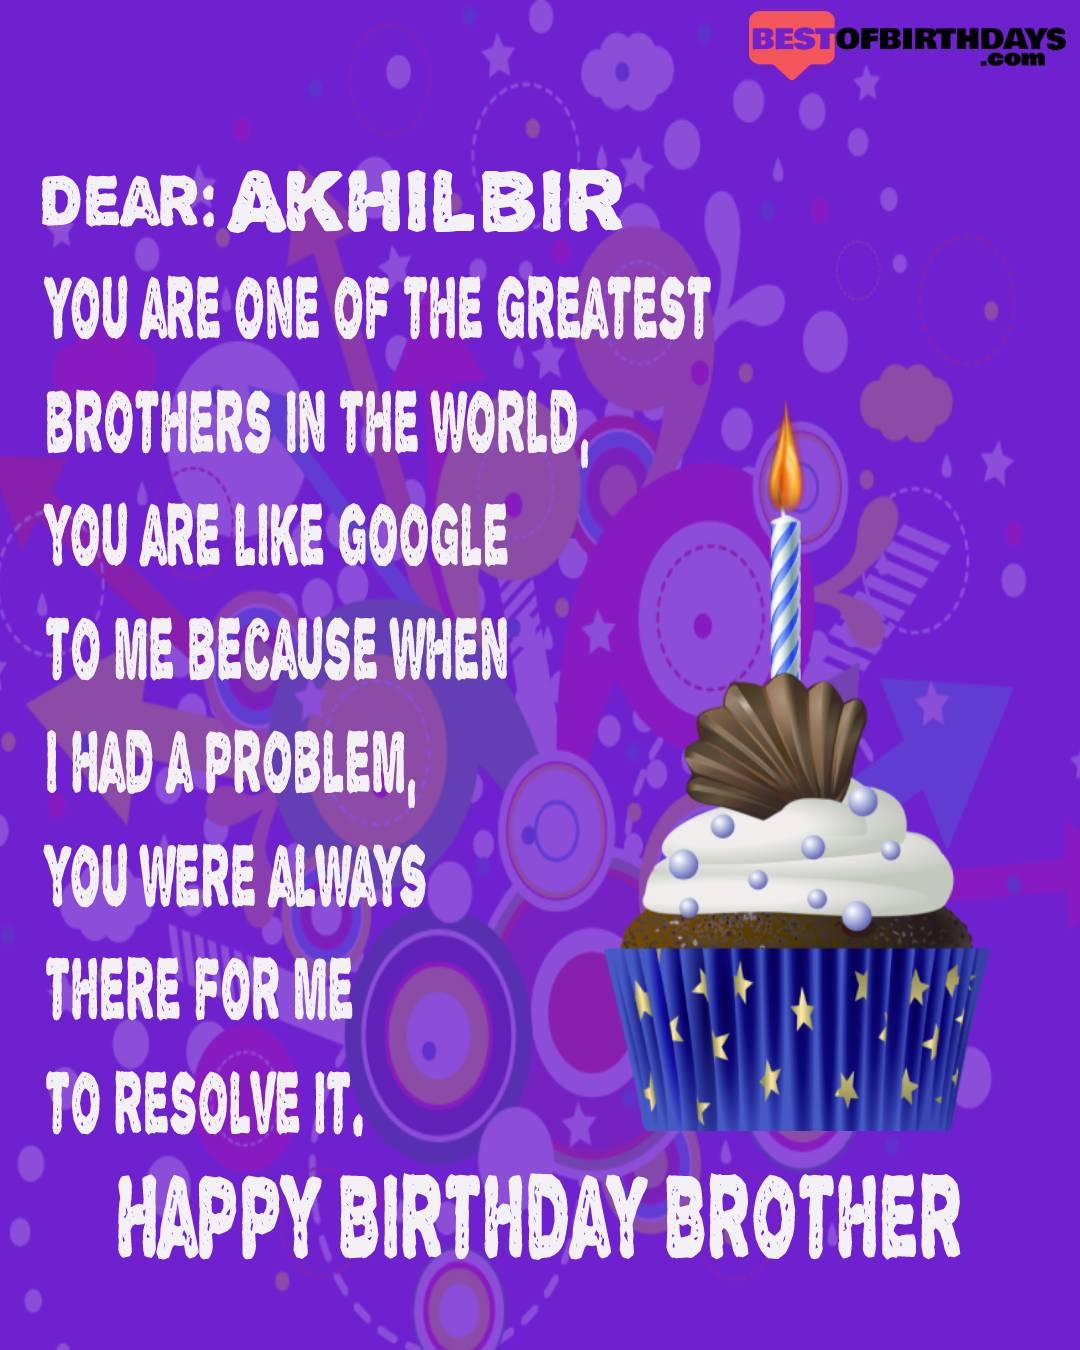 Happy birthday akhilbir bhai brother bro